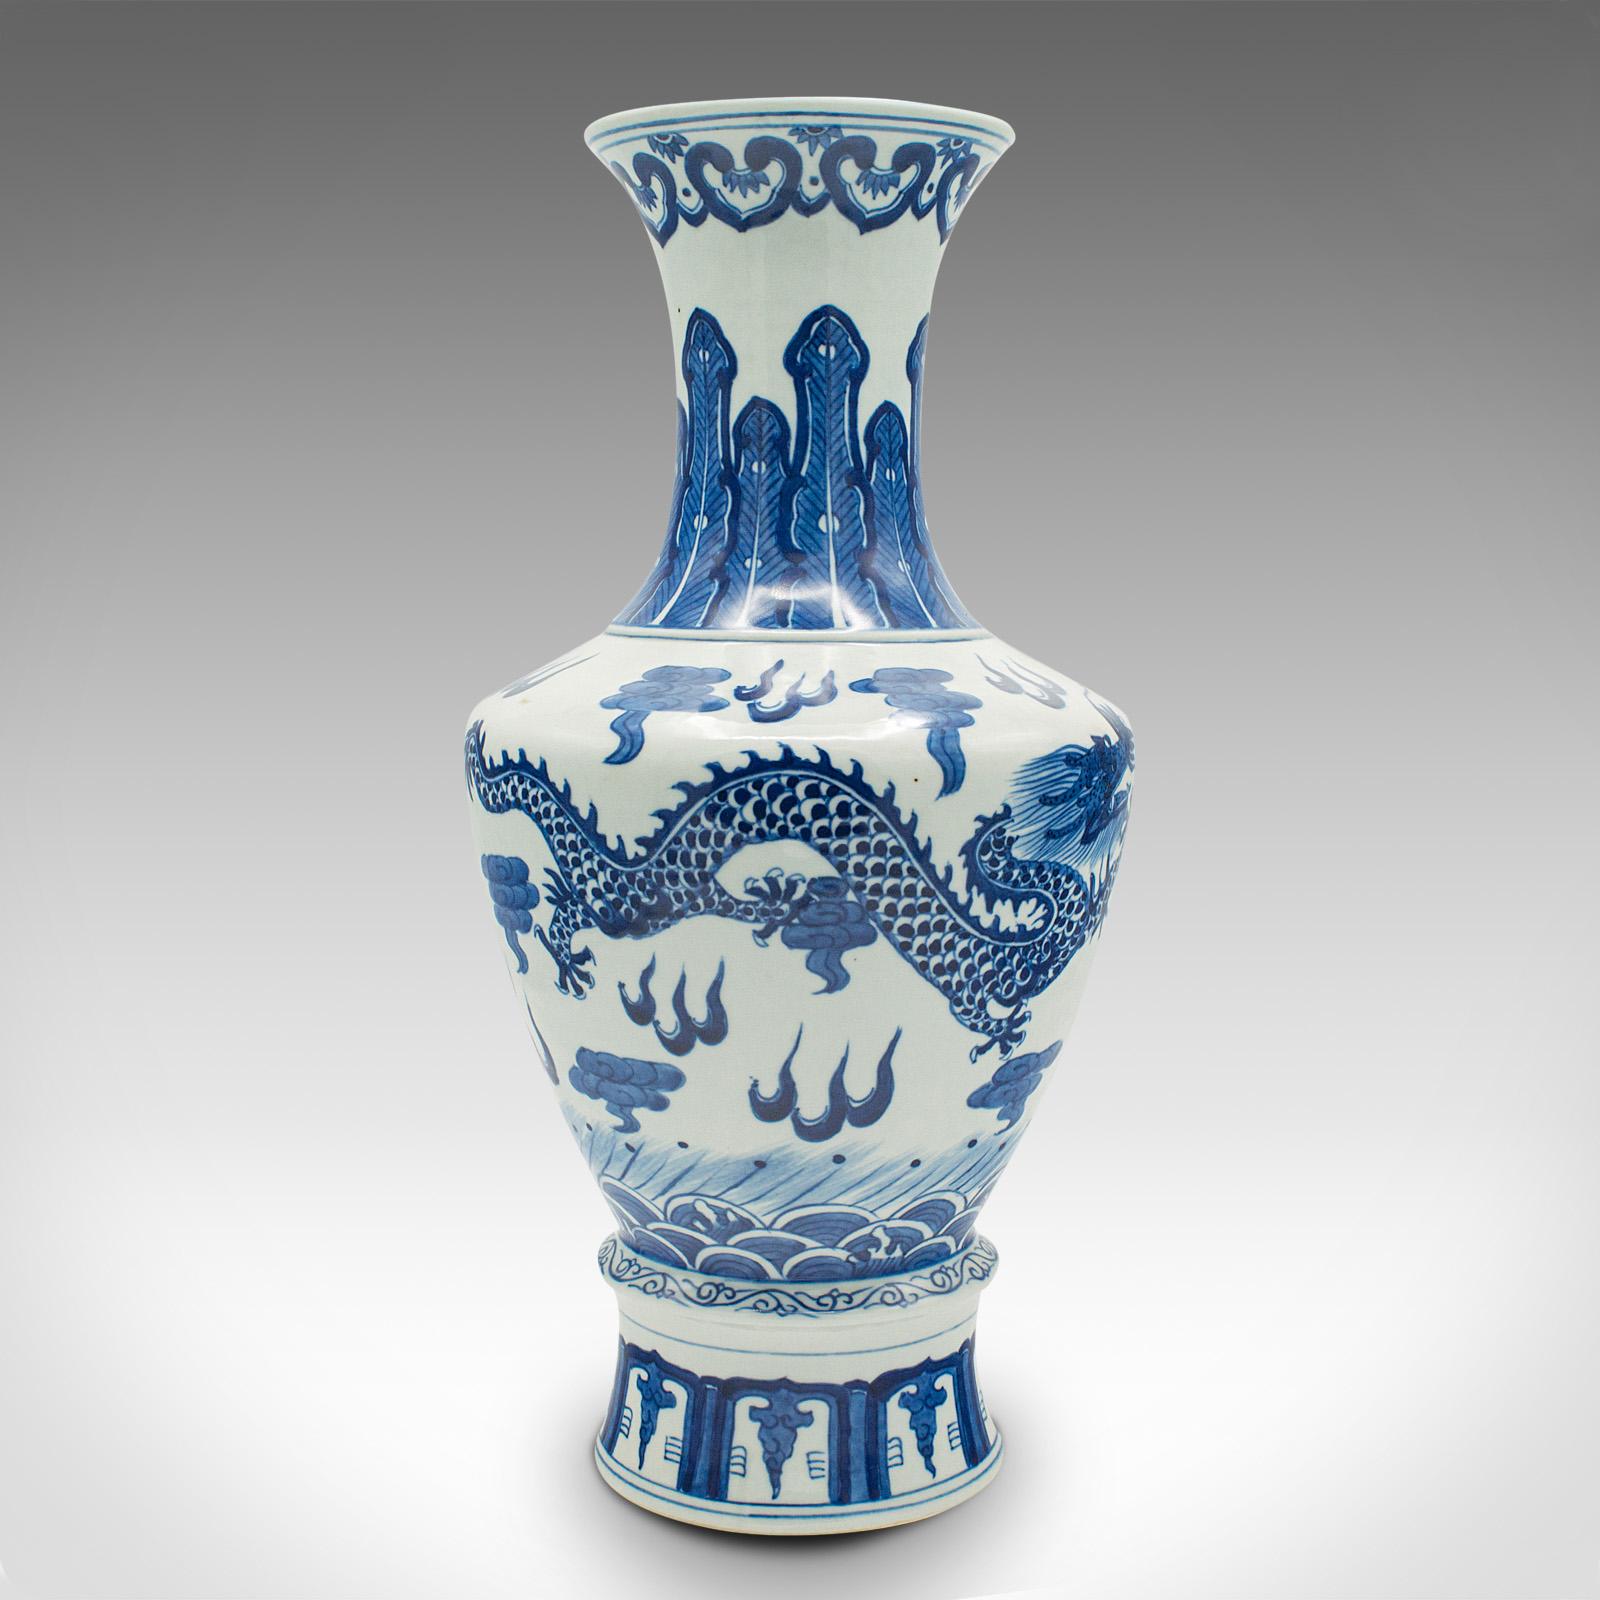 Art Deco Large Vintage White and Blue Vase, Chinese, Ceramic, Decor, Flower Baluster For Sale